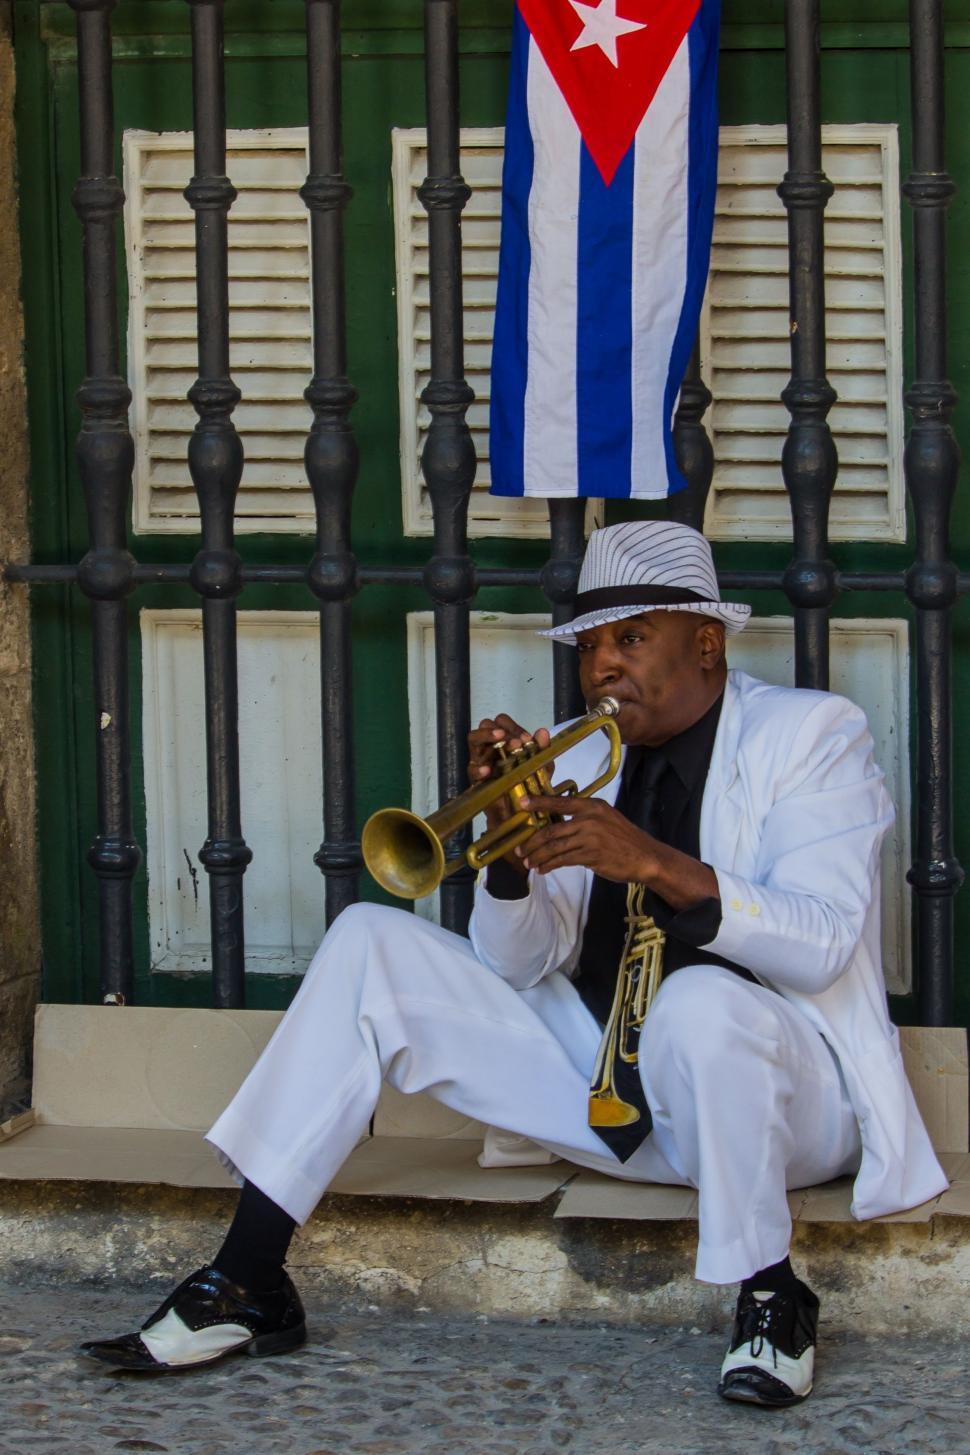 Free Image of Street performer: Trumpeter 